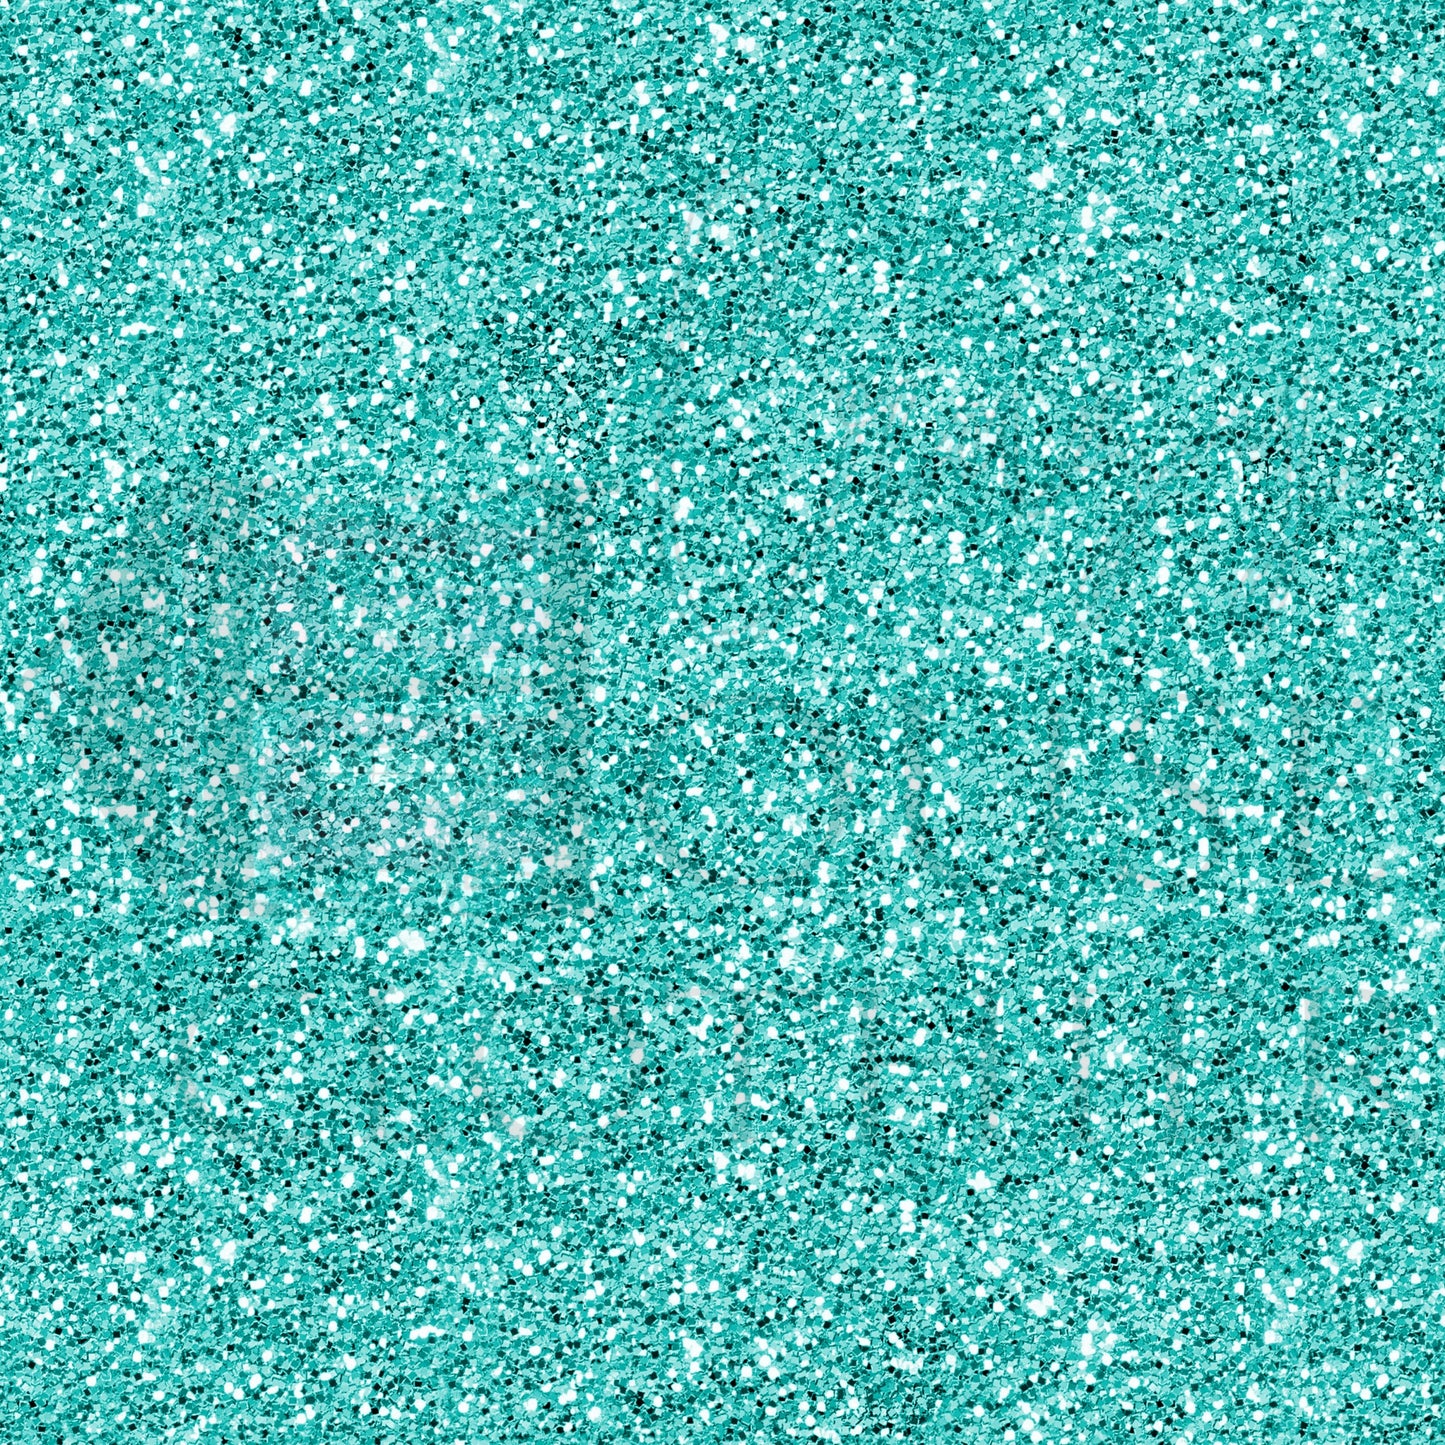 Turquoise Glitter